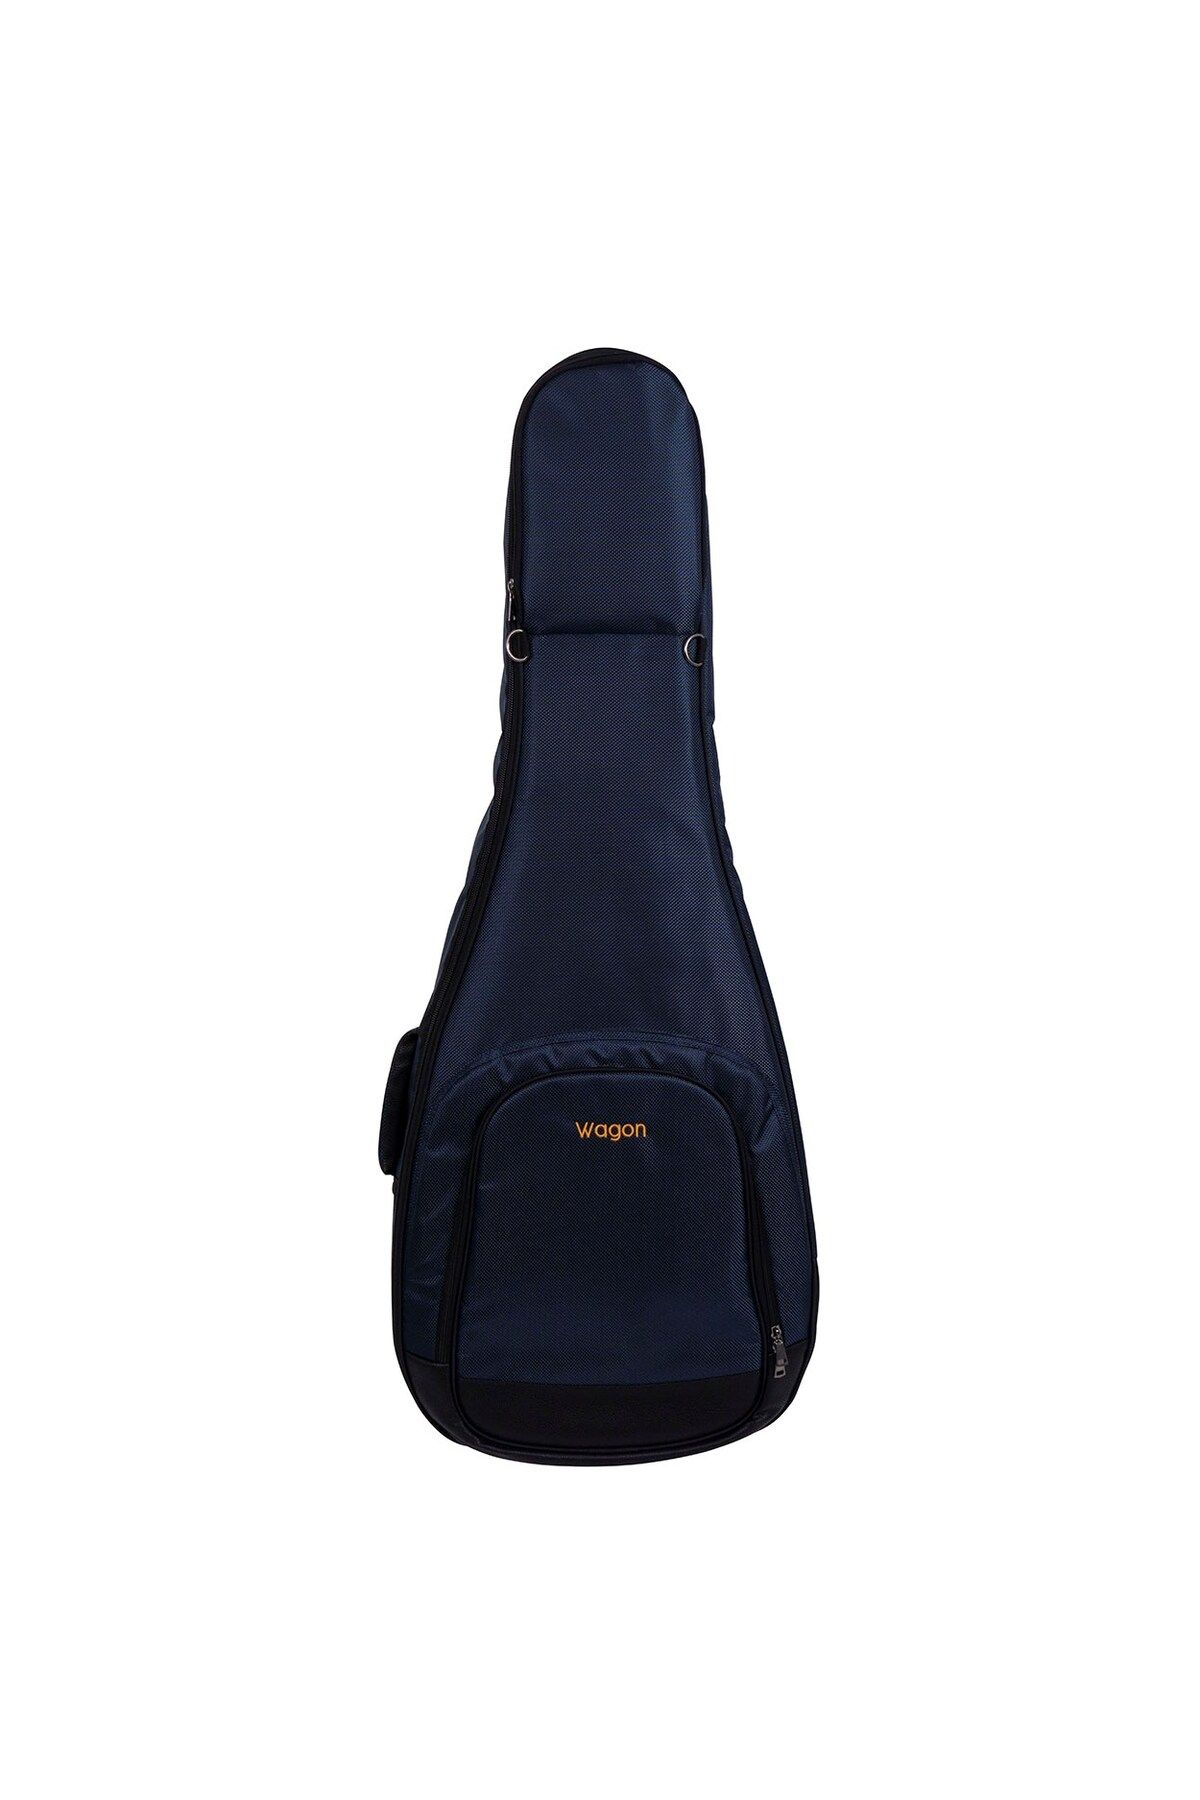 Wagon 05 Serisi Akustik Gitar Çantası - Mavi